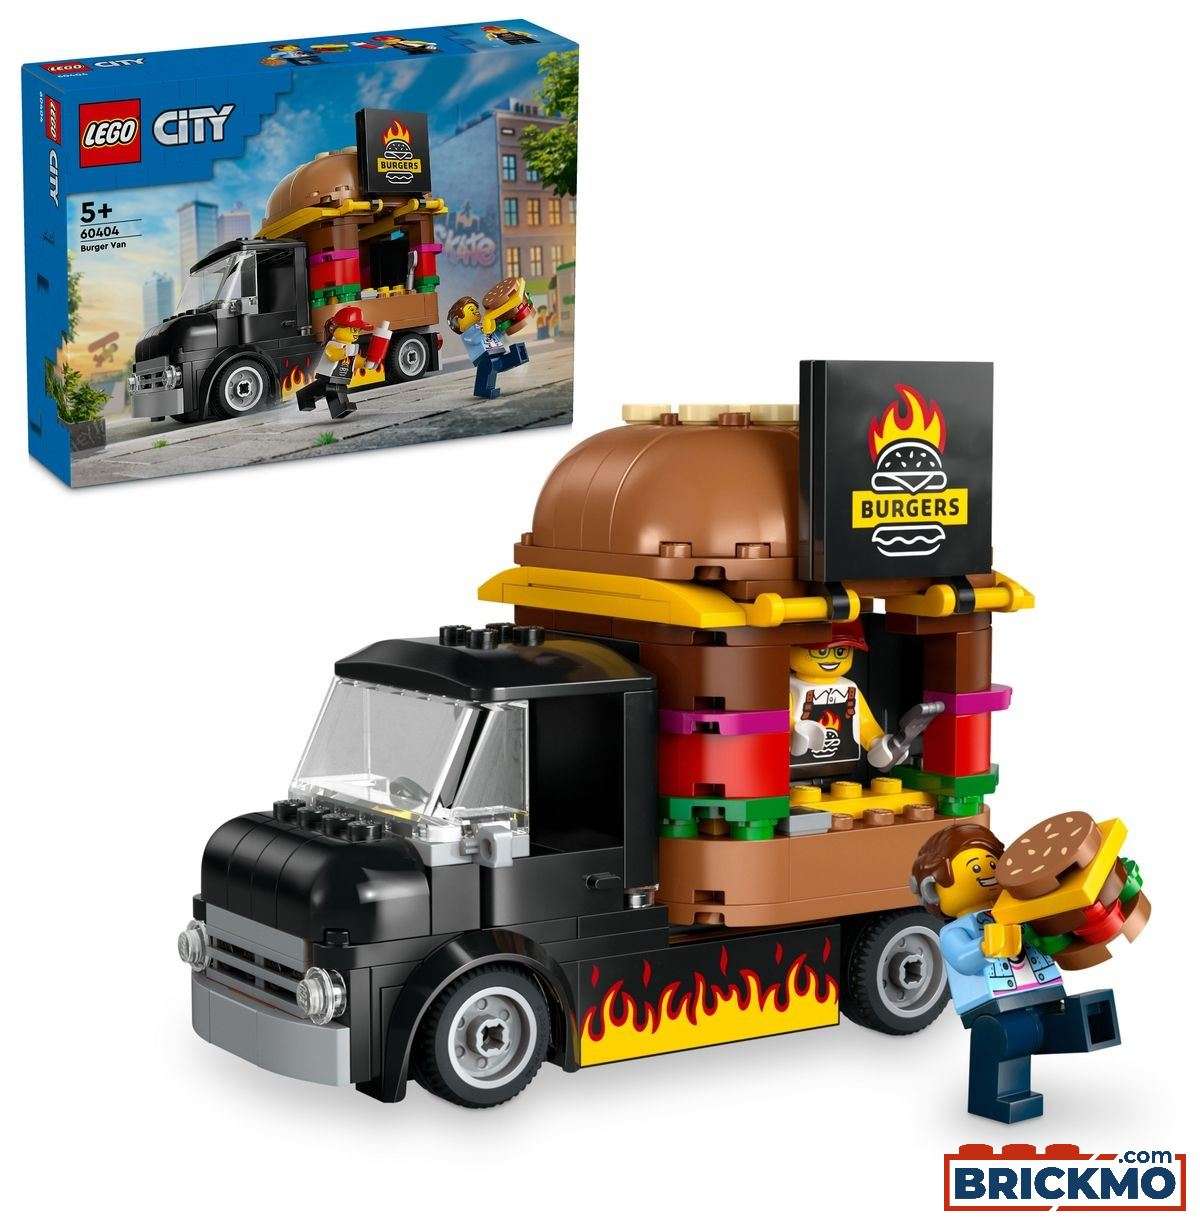 LEGO City 60404 Burgervogn 60404